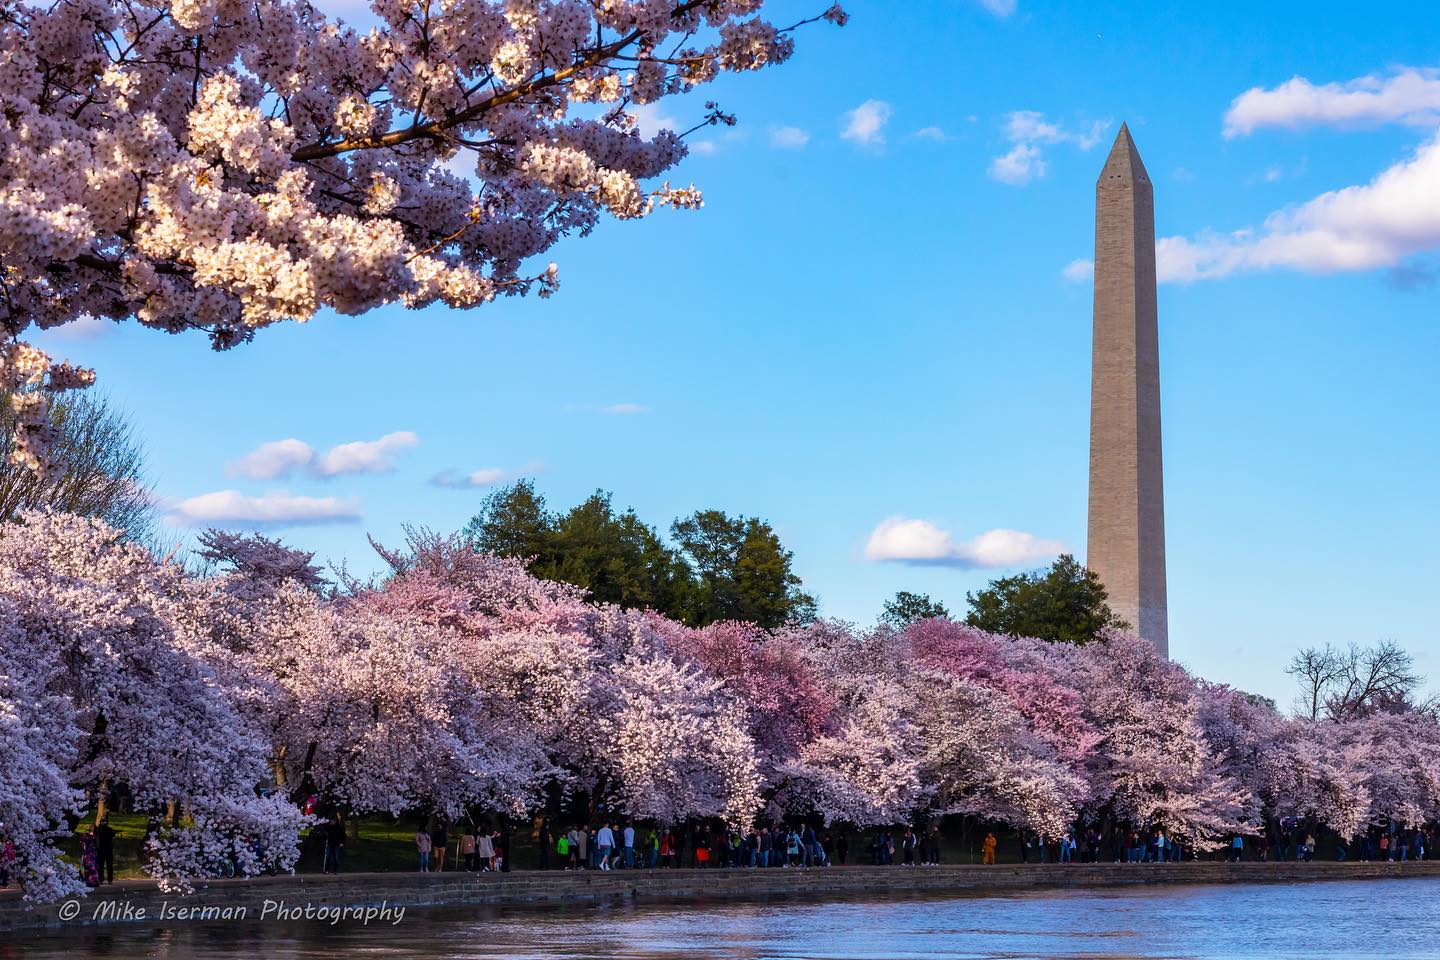 National Cherry Blossom Festival 2023 in Washington, D.C. Dates